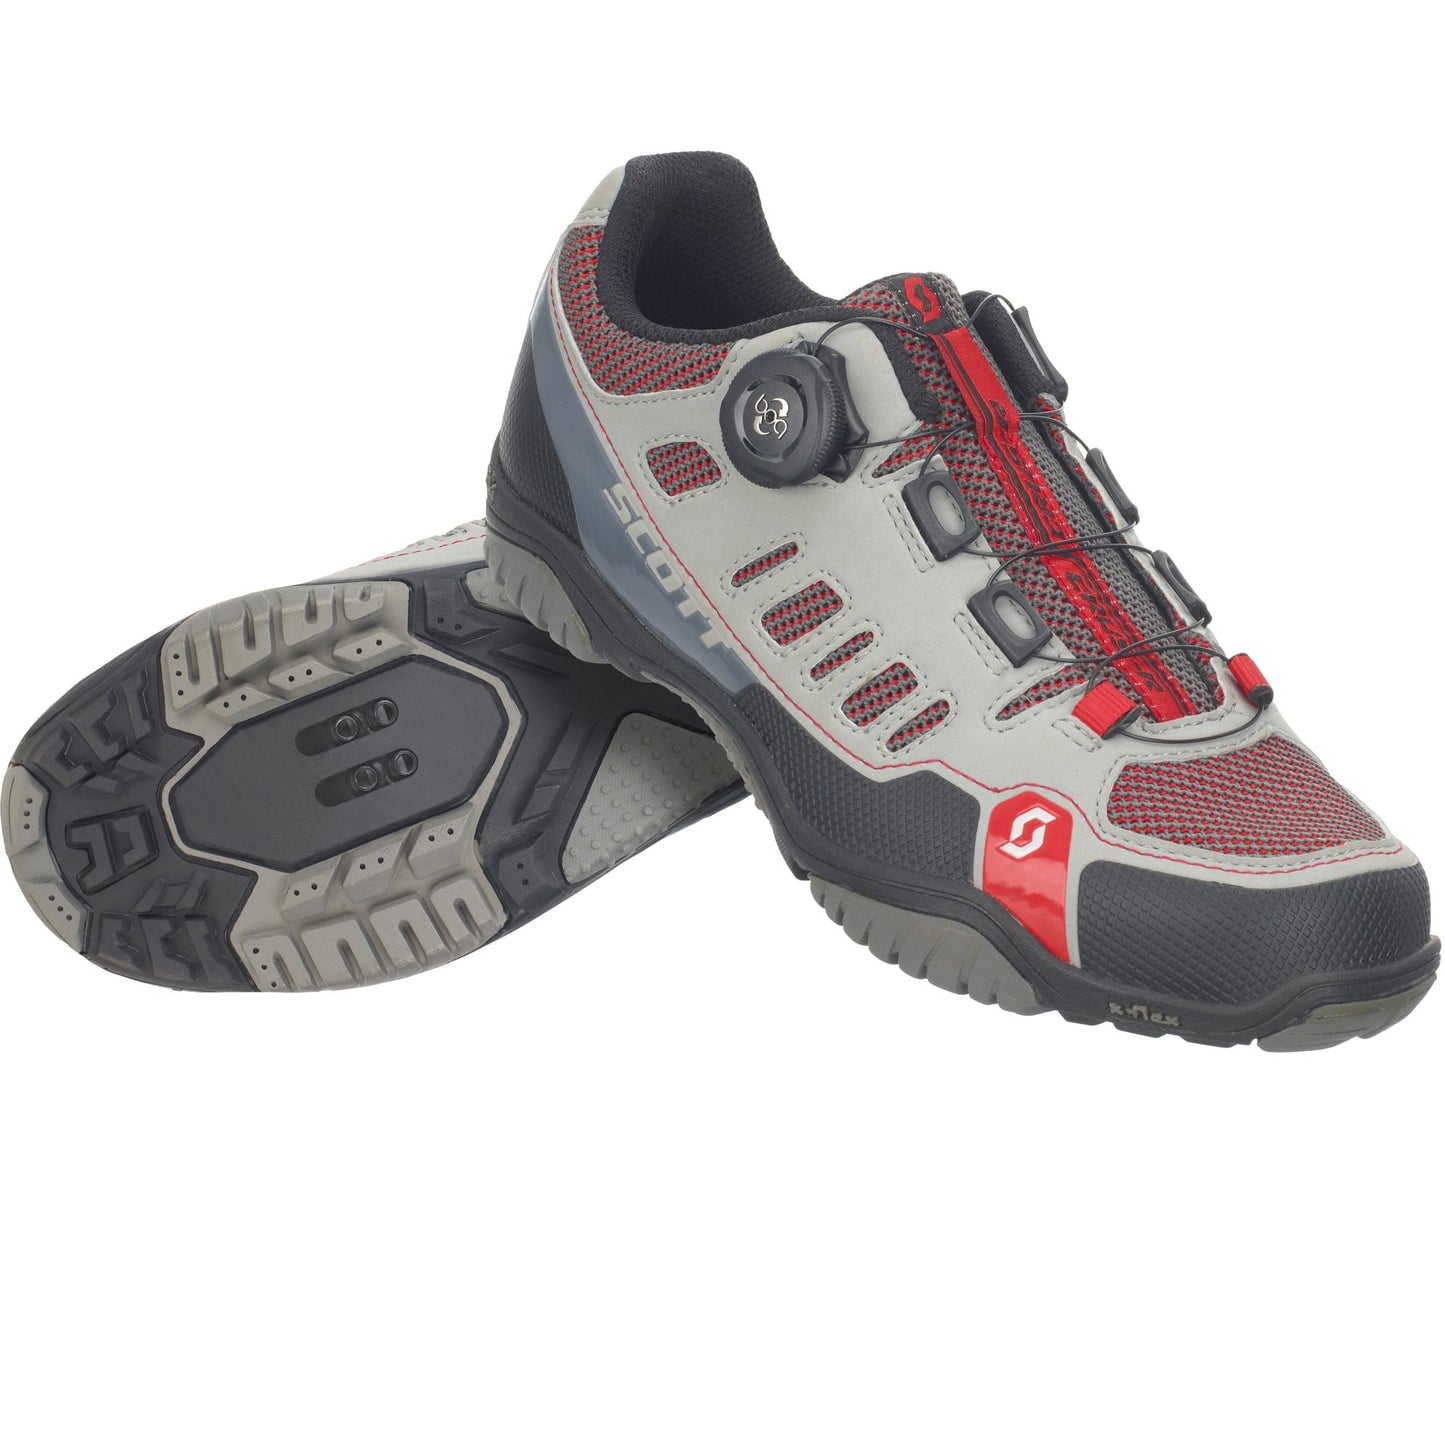 Scott Women's Sport Crus-r BOA Shoe Grey Red - Scott Bike Shoes